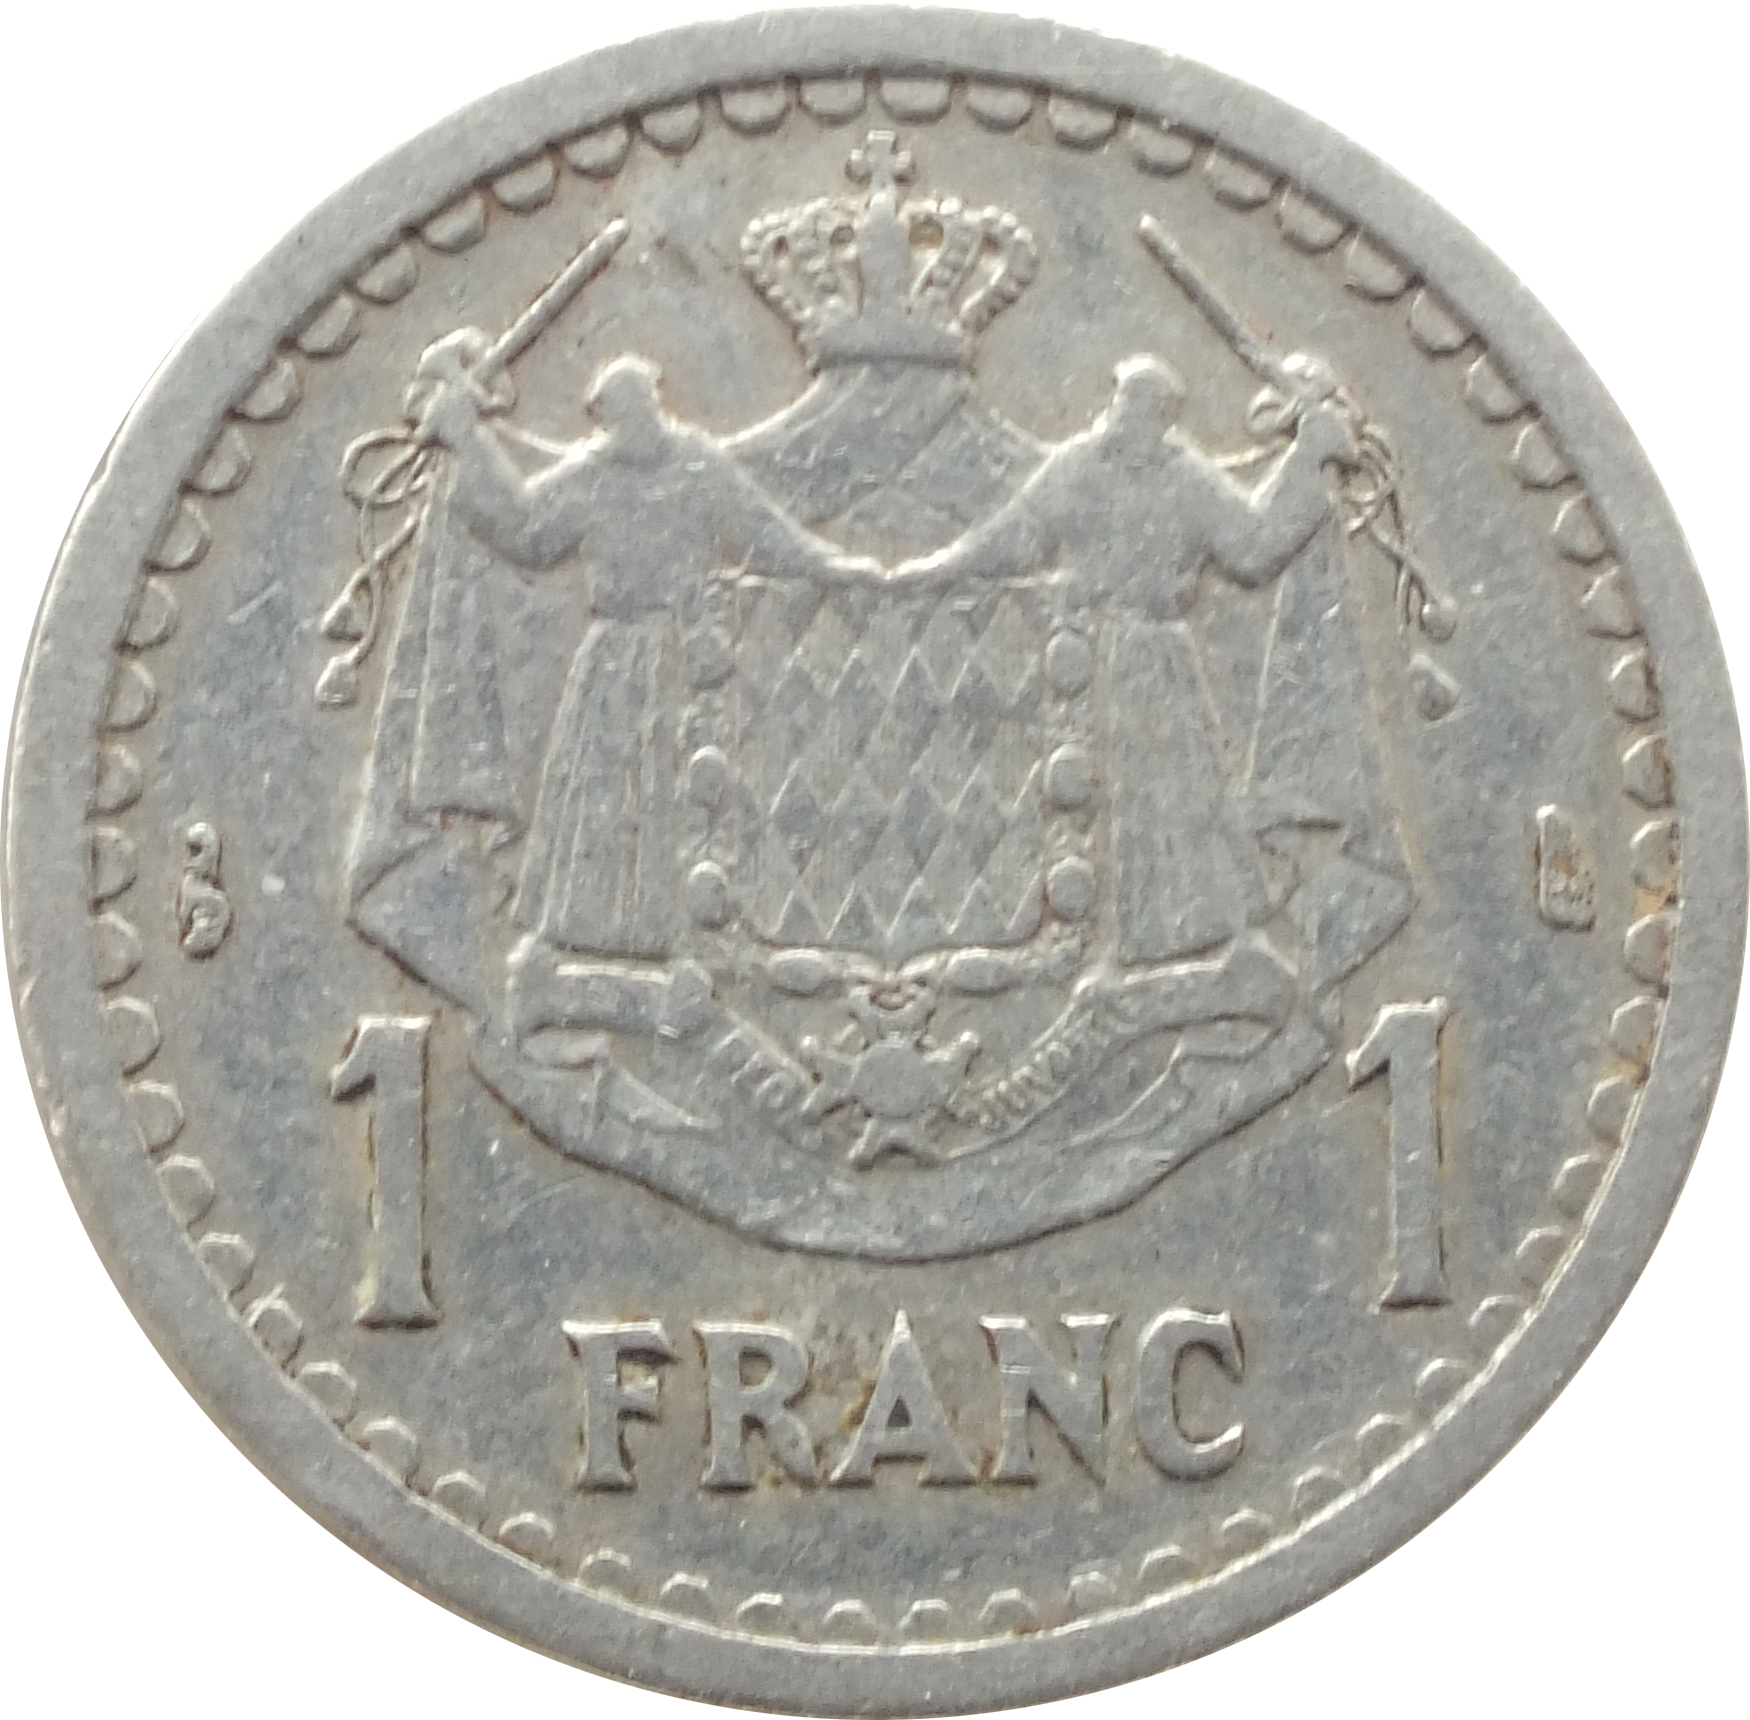 1 Franc - Louis II (1943) Monaco KM# 120 - CoinsBook